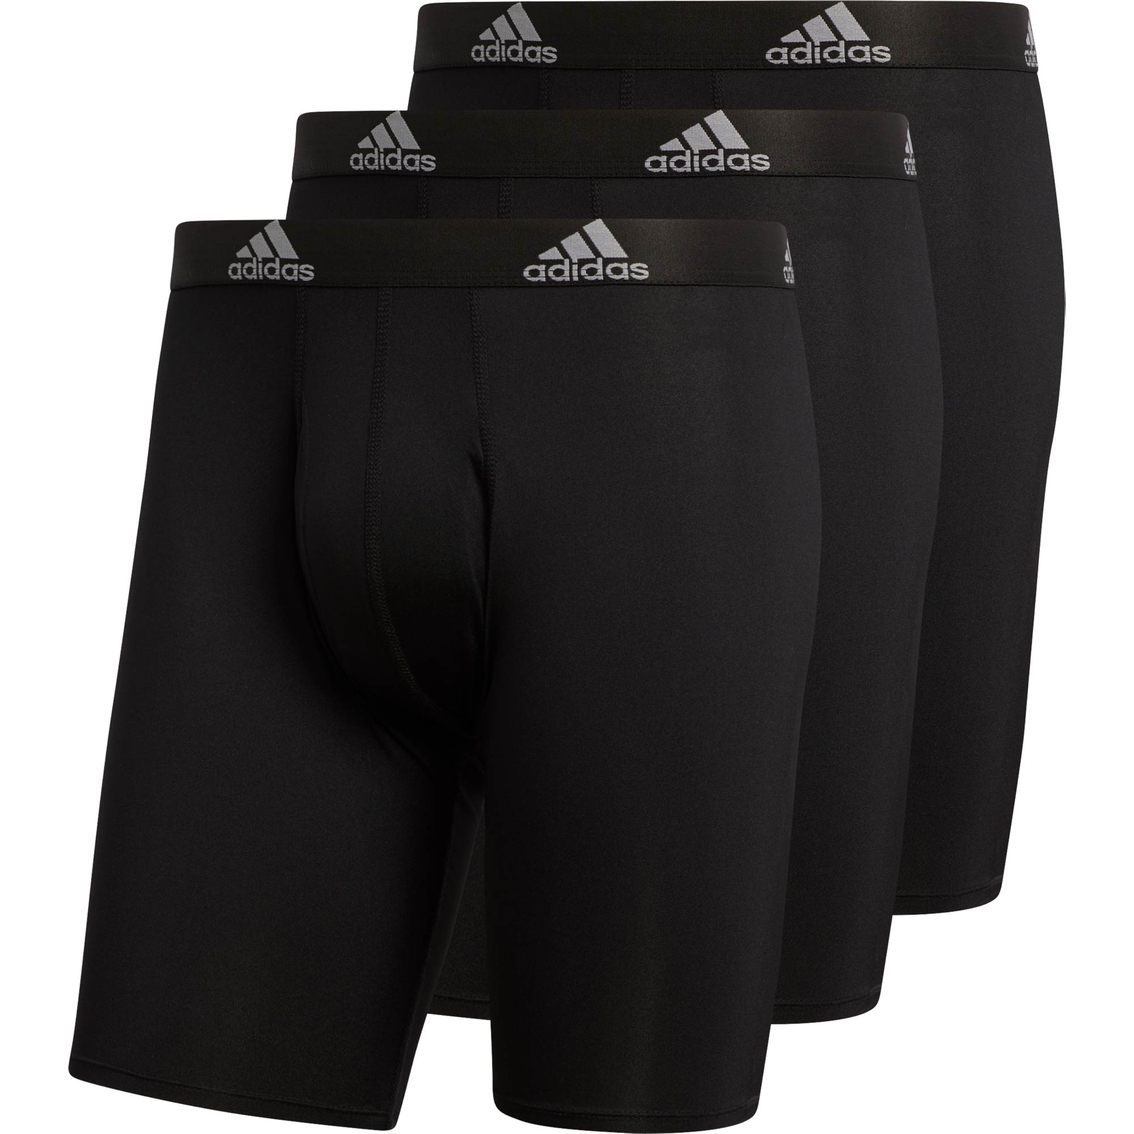 Adidas Performance Long Boxer Briefs 3 Pk. | Underwear | Clothing ...